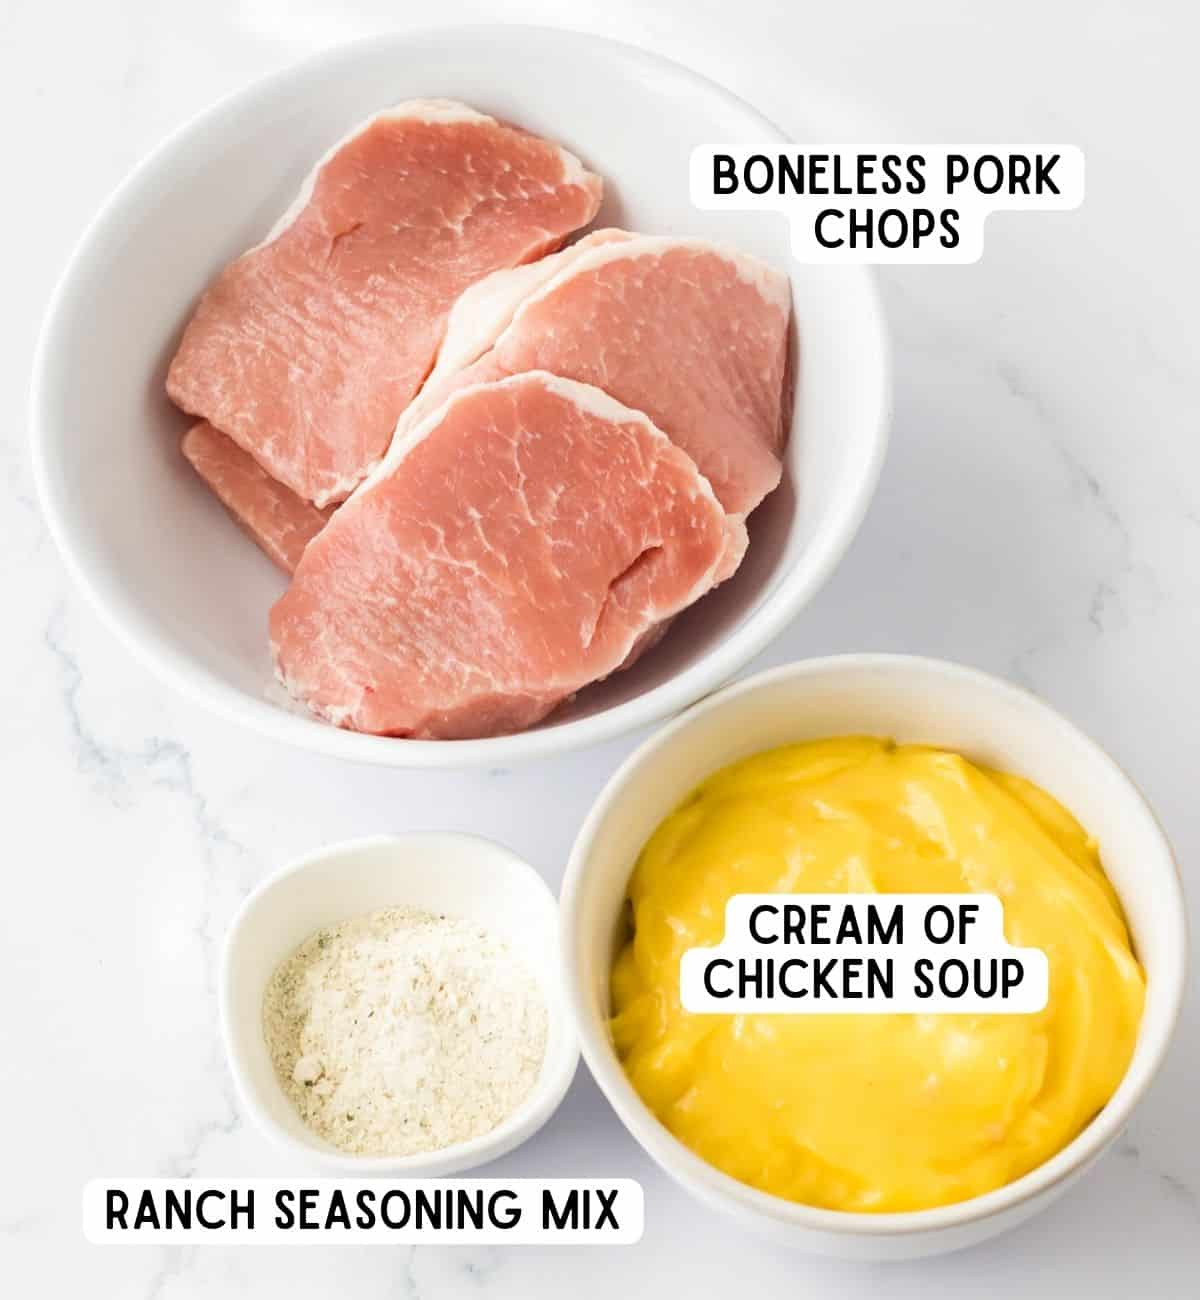 Boneless pork chops, cream of chicken soup, and ranch seasoning mix.